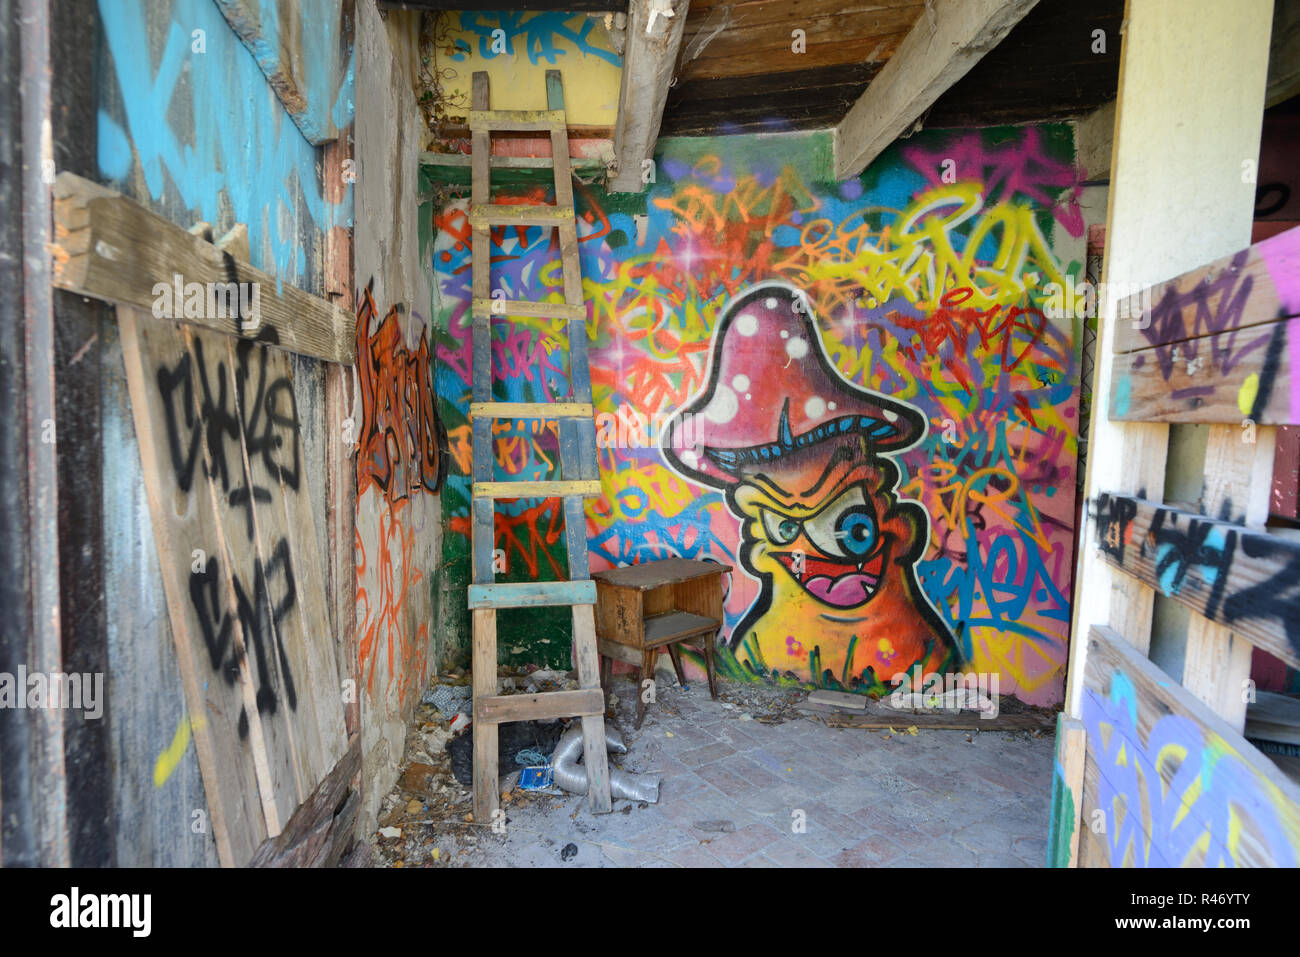 Graffiti Covered Walls, Homemade Rickety Ladder & Magic Mushroom Design in Squat Interior of Abandoned House France Stock Photo